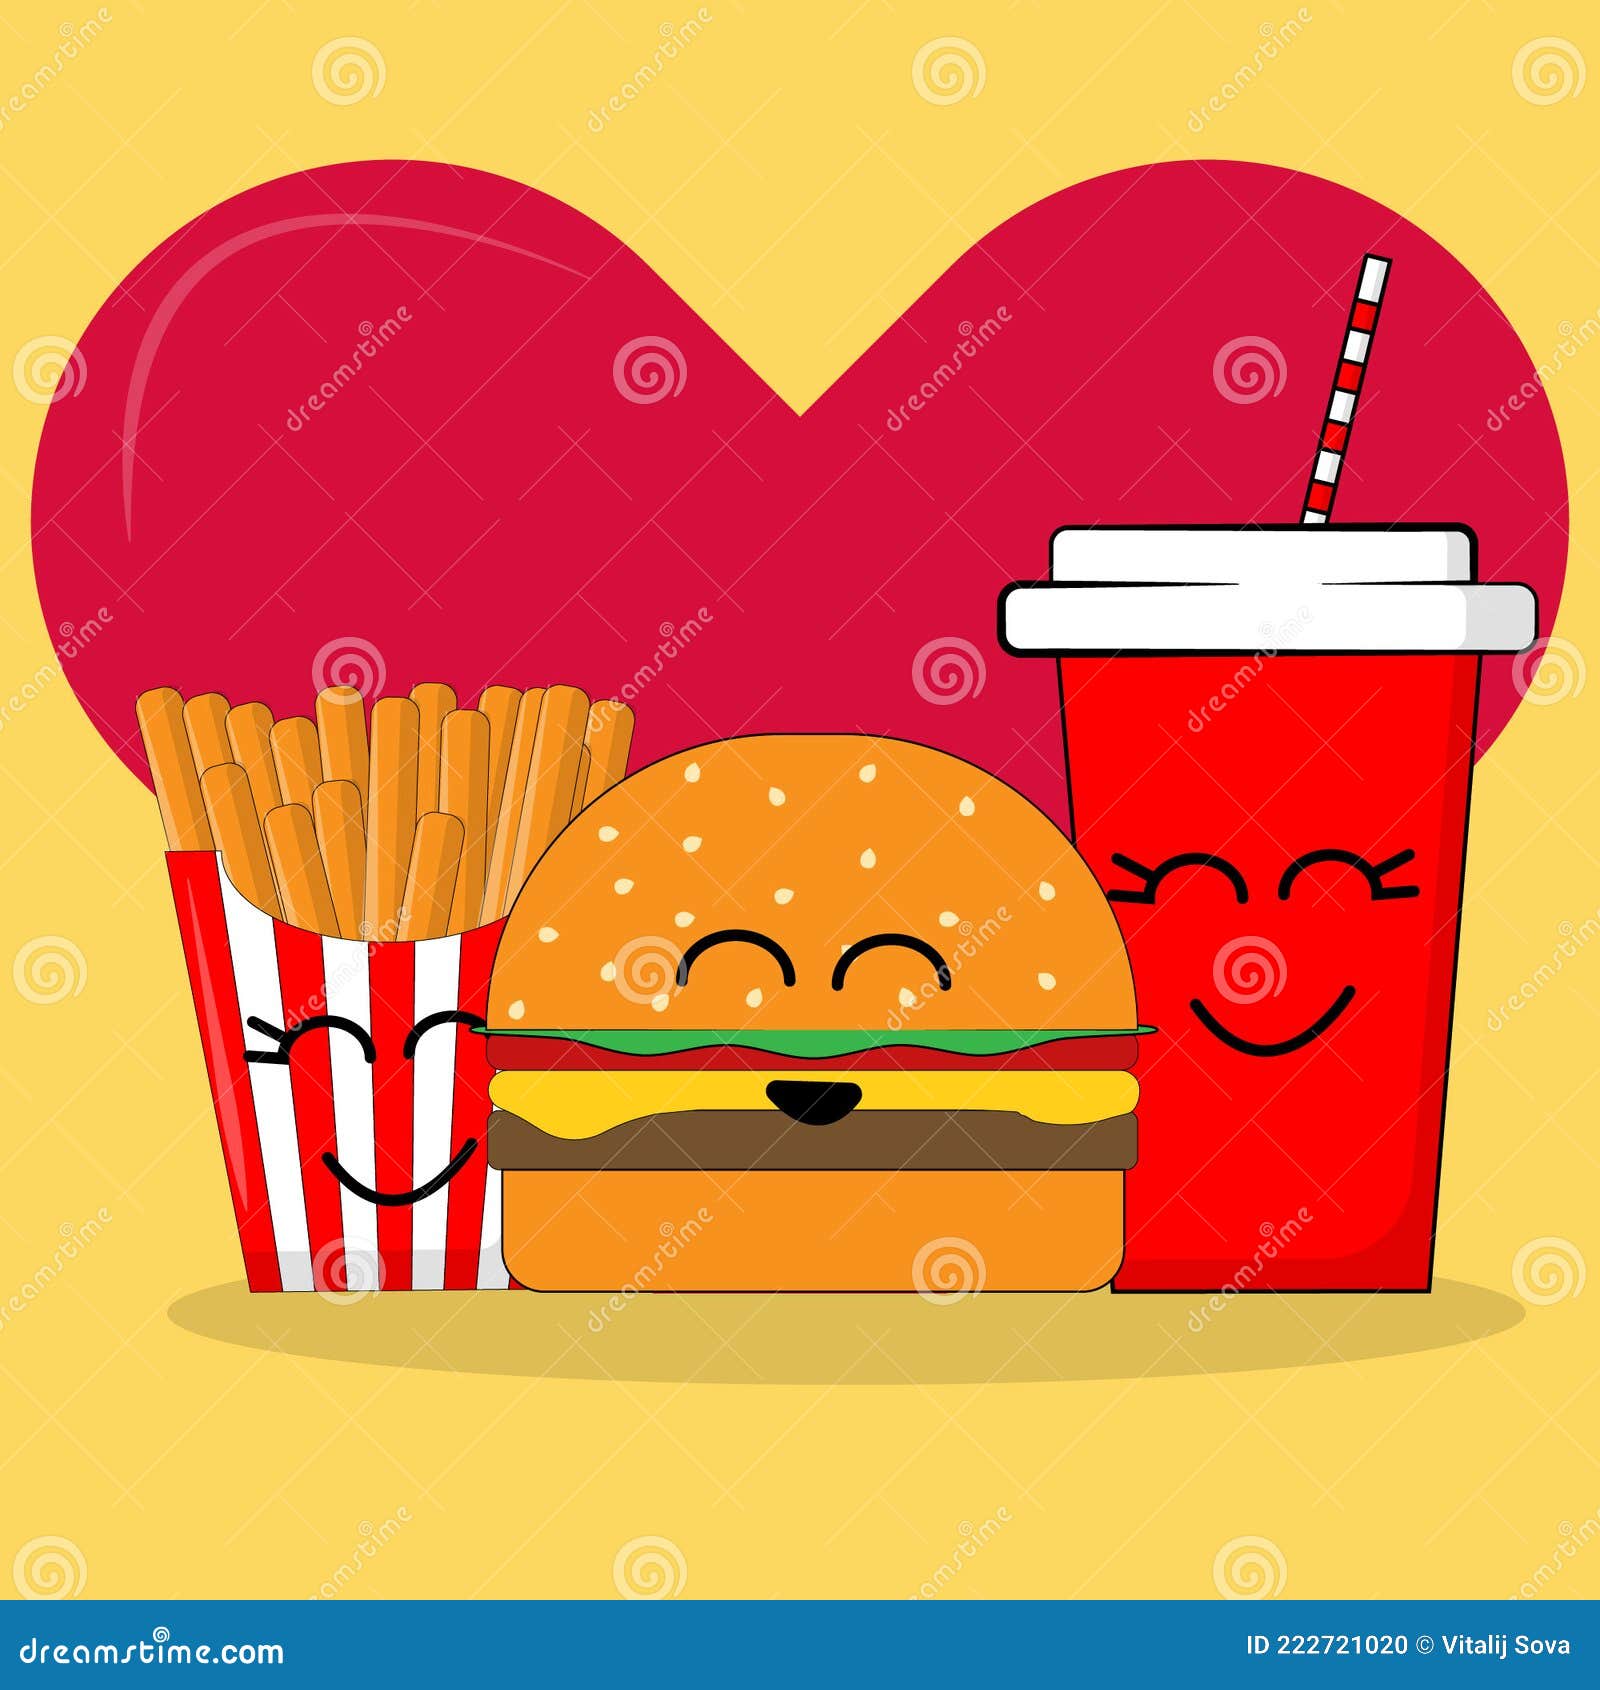 Vector fresh burger stock illustration. Illustration of hook - 222721020